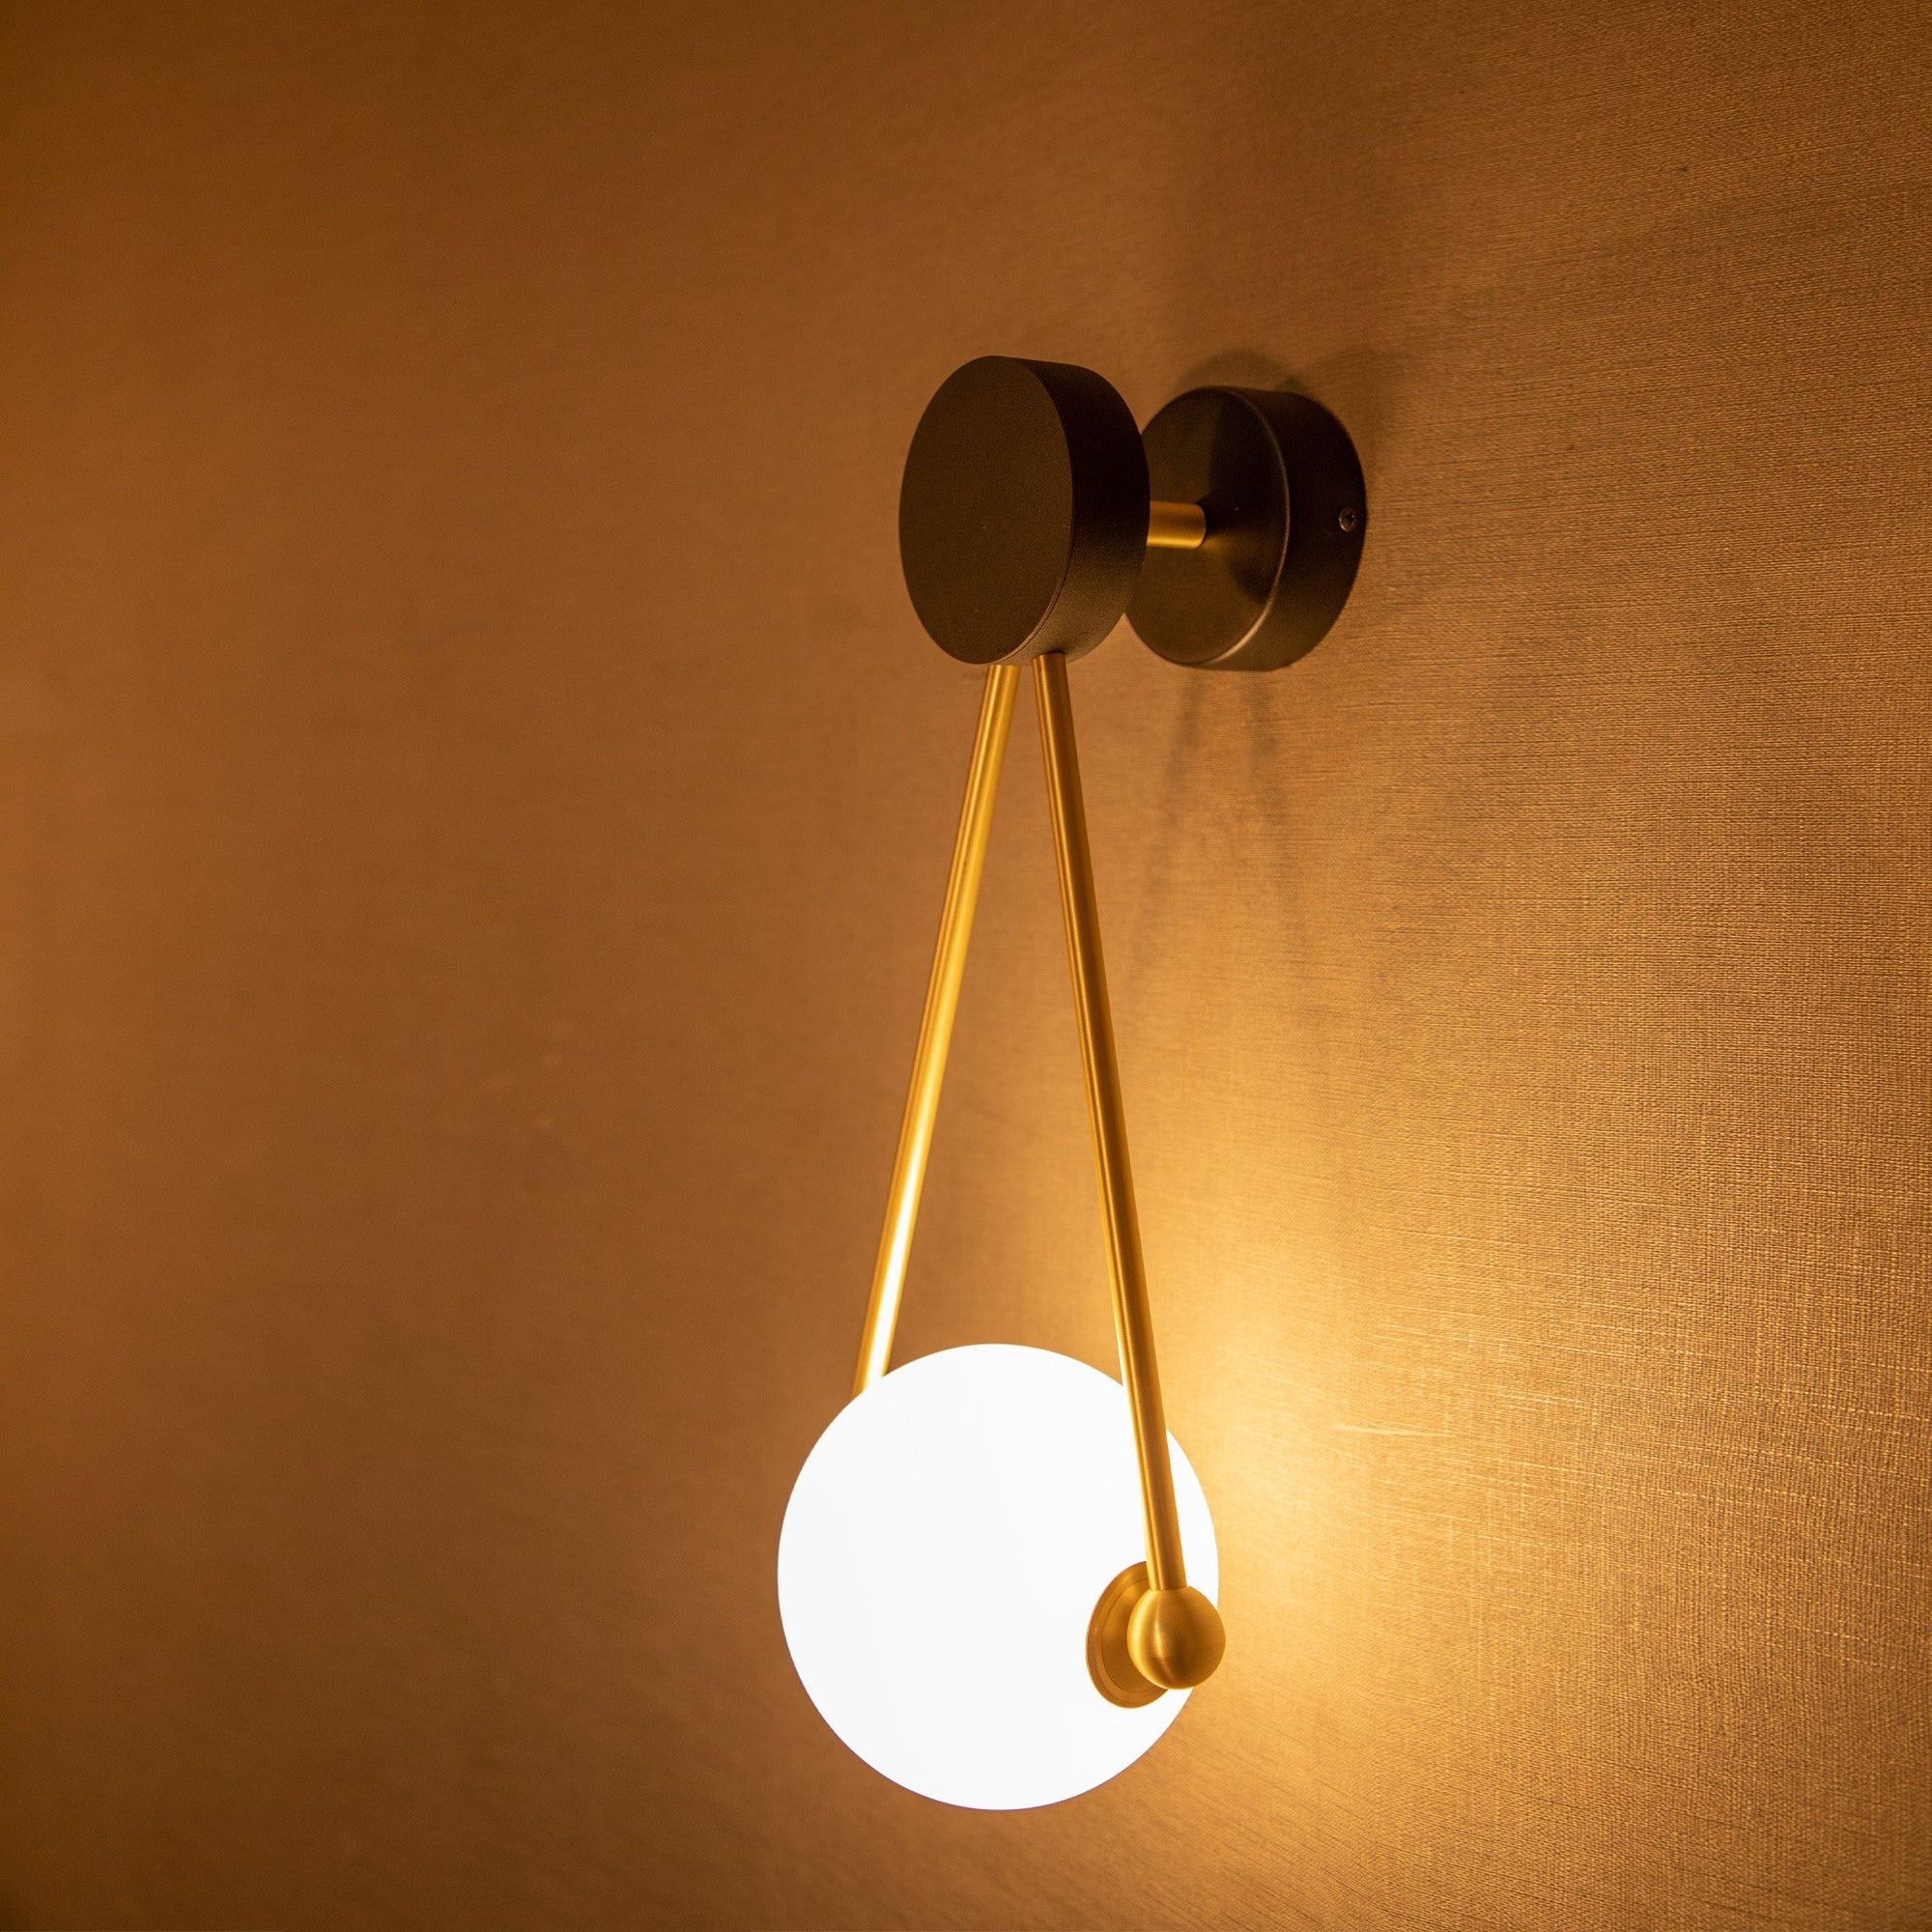 Shop Hang on LED Wall Light online